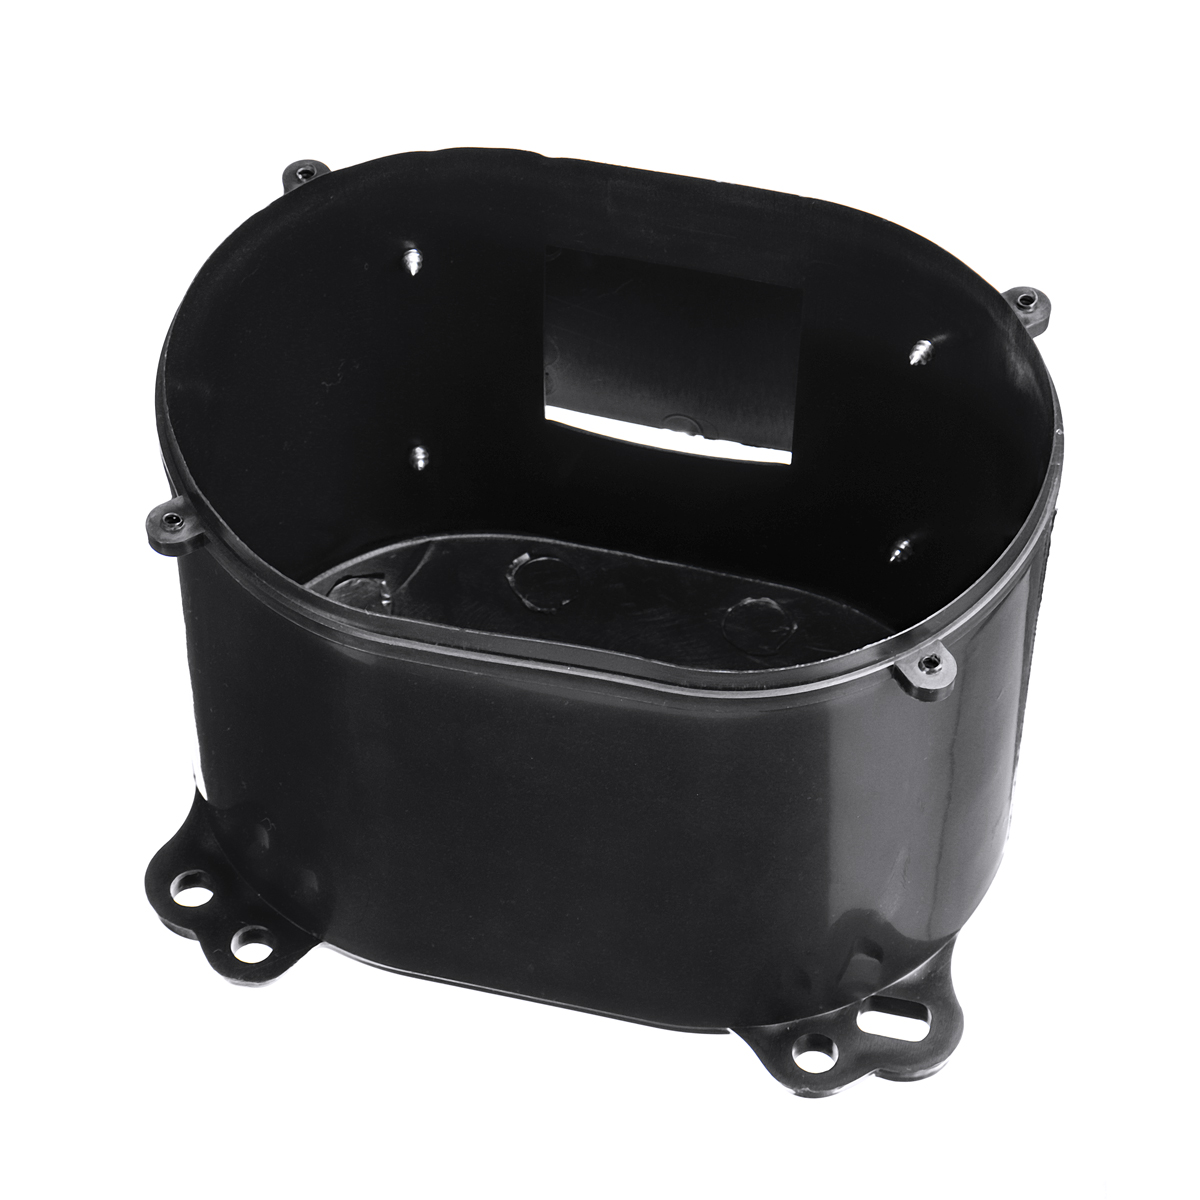 25mm-Heater-Air-Intake-Filter-Silencer-For-Dometic-Eberspacher-Webasto-Diesel-Heater-1595035-6